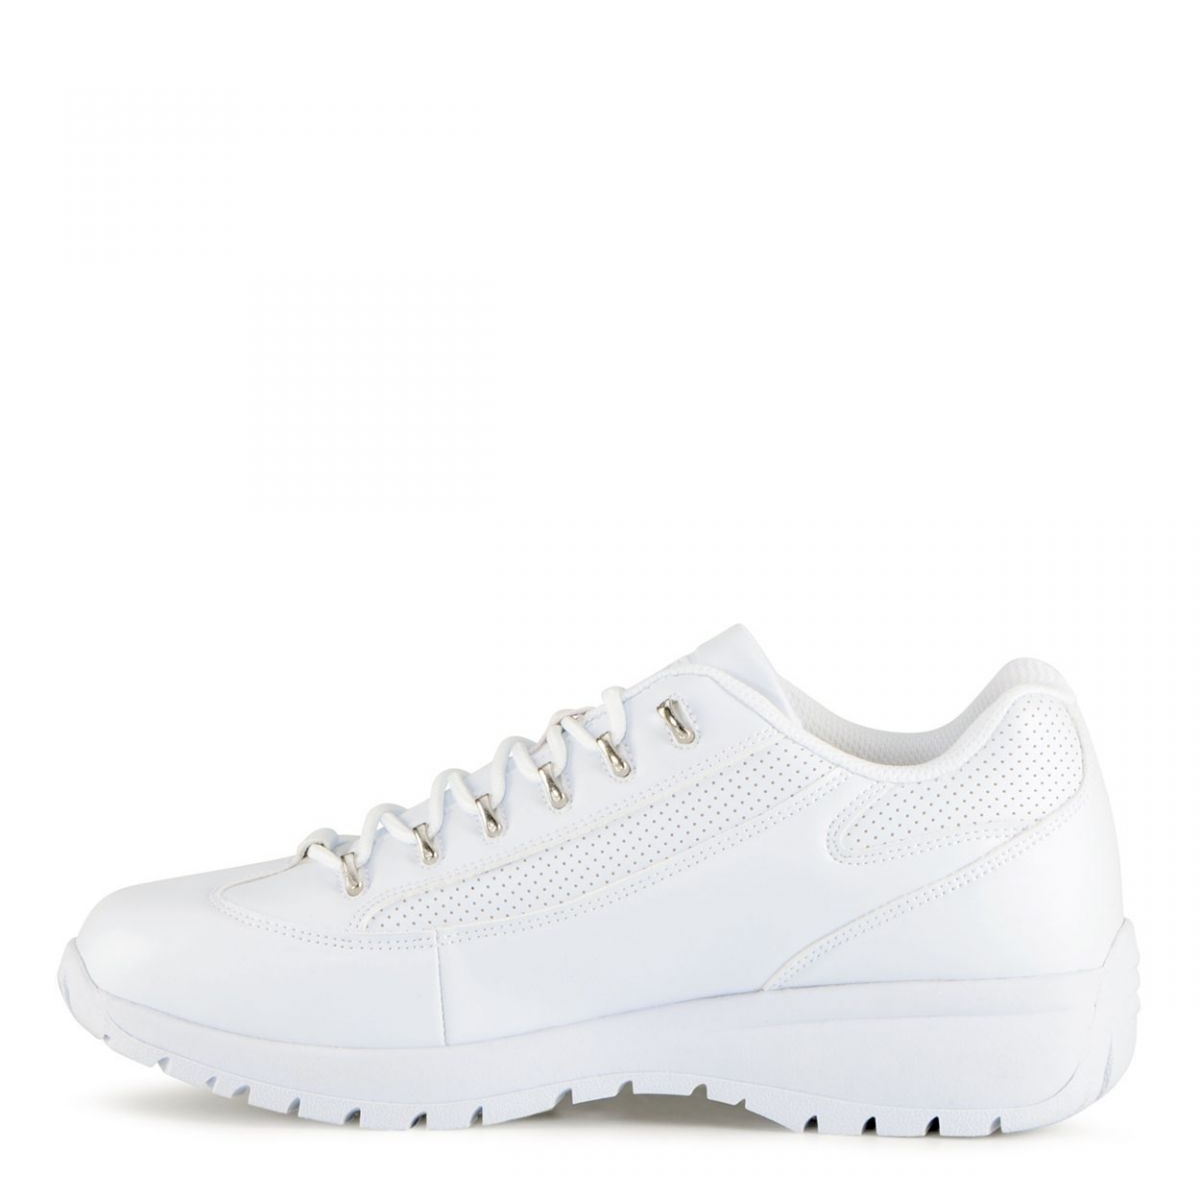 Lugz Men's Express Sneaker White - MEXPRSPV-100 WHITE - WHITE, 11